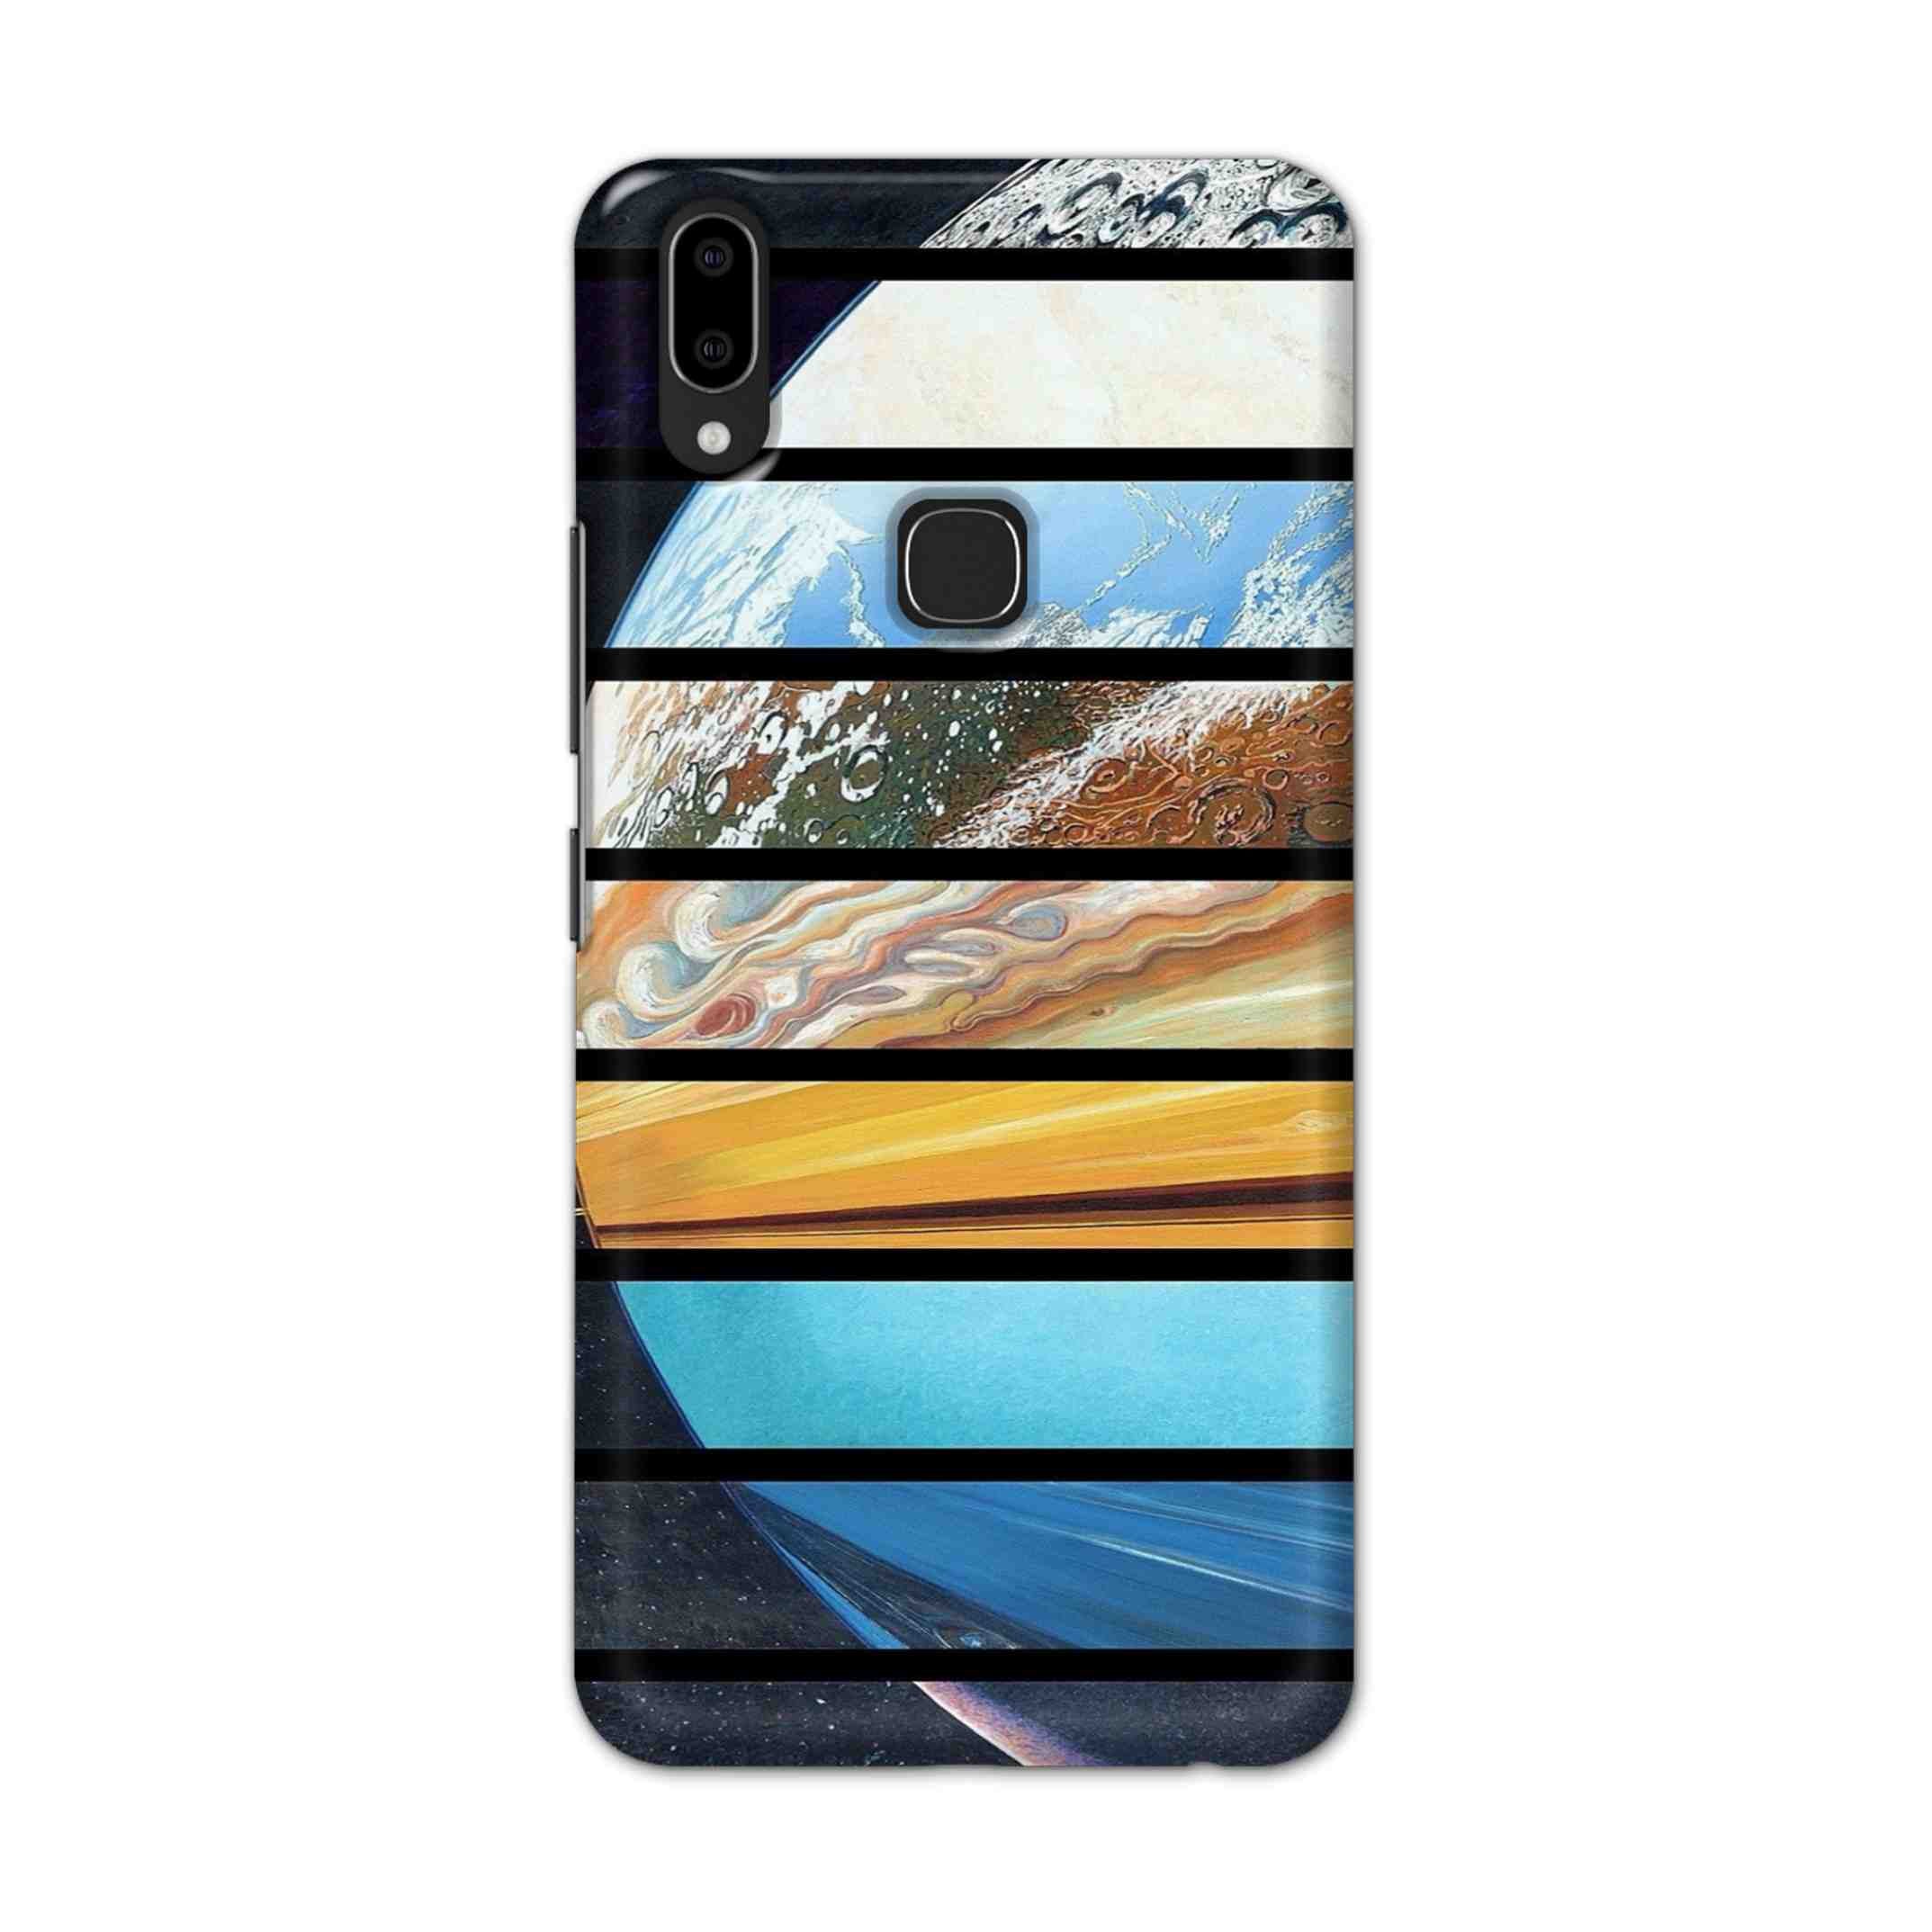 Buy Colourful Earth Hard Back Mobile Phone Case Cover For Vivo V9 / V9 Youth Online